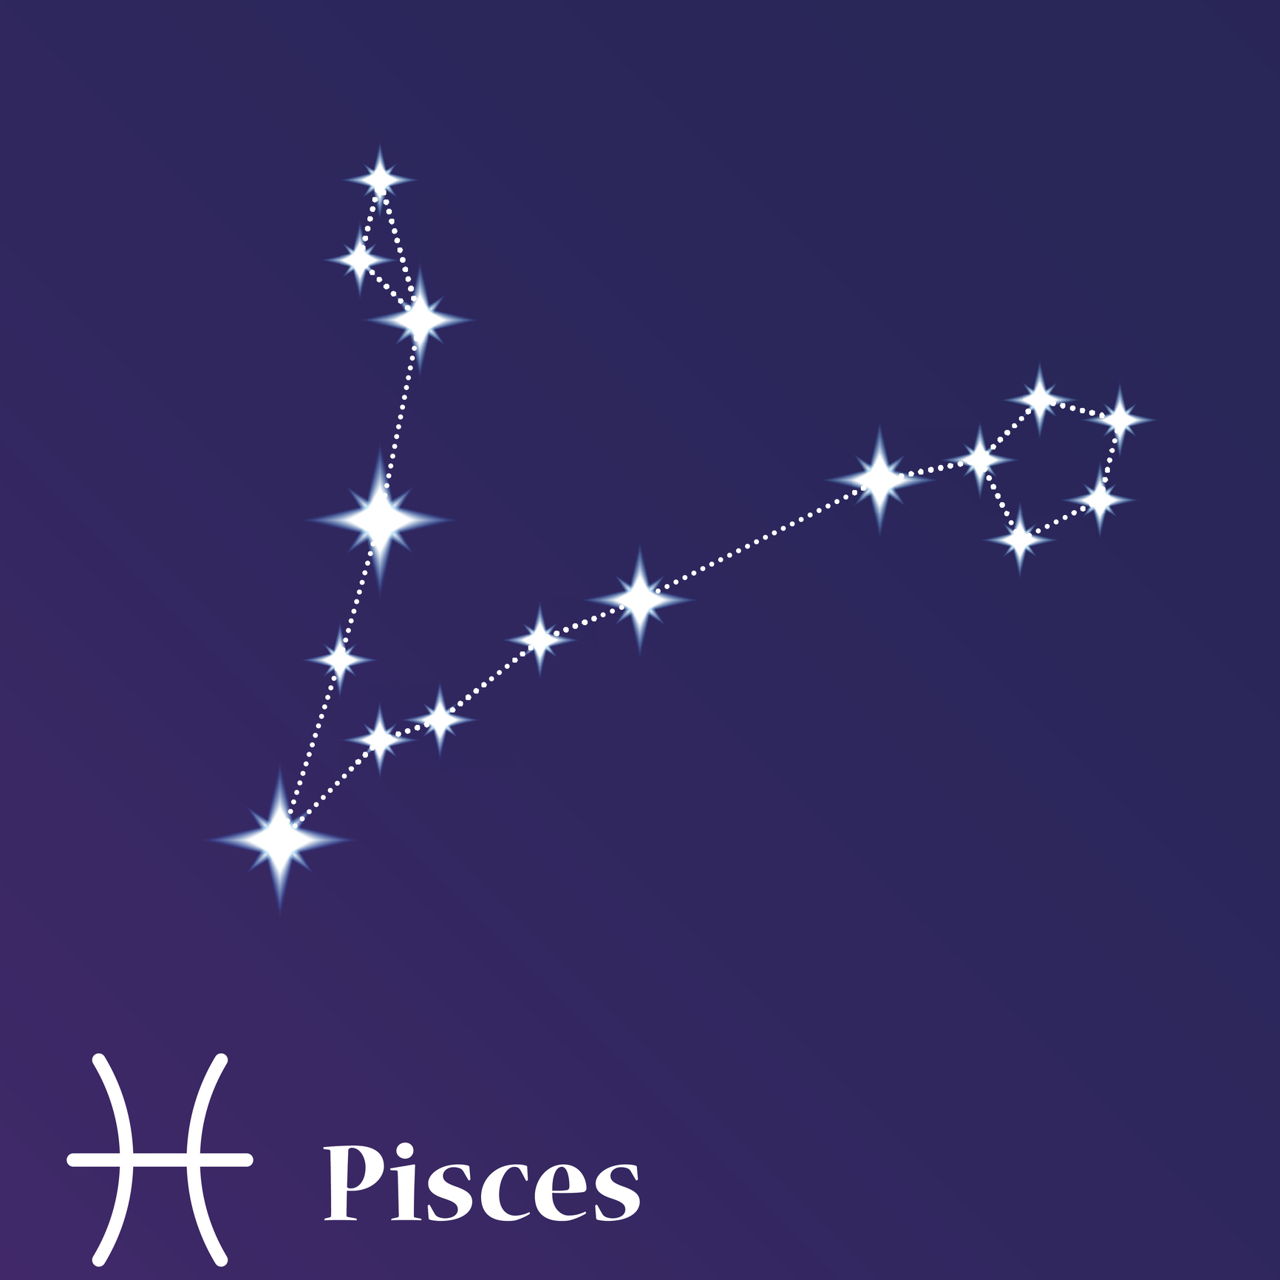 Созвездие 54. Астеризмы созвездия рыбы. Созвездие рыбы Pisces. Звезда Омикрон созвездия рыбы. Созвездие рыбы на Звездном небе.